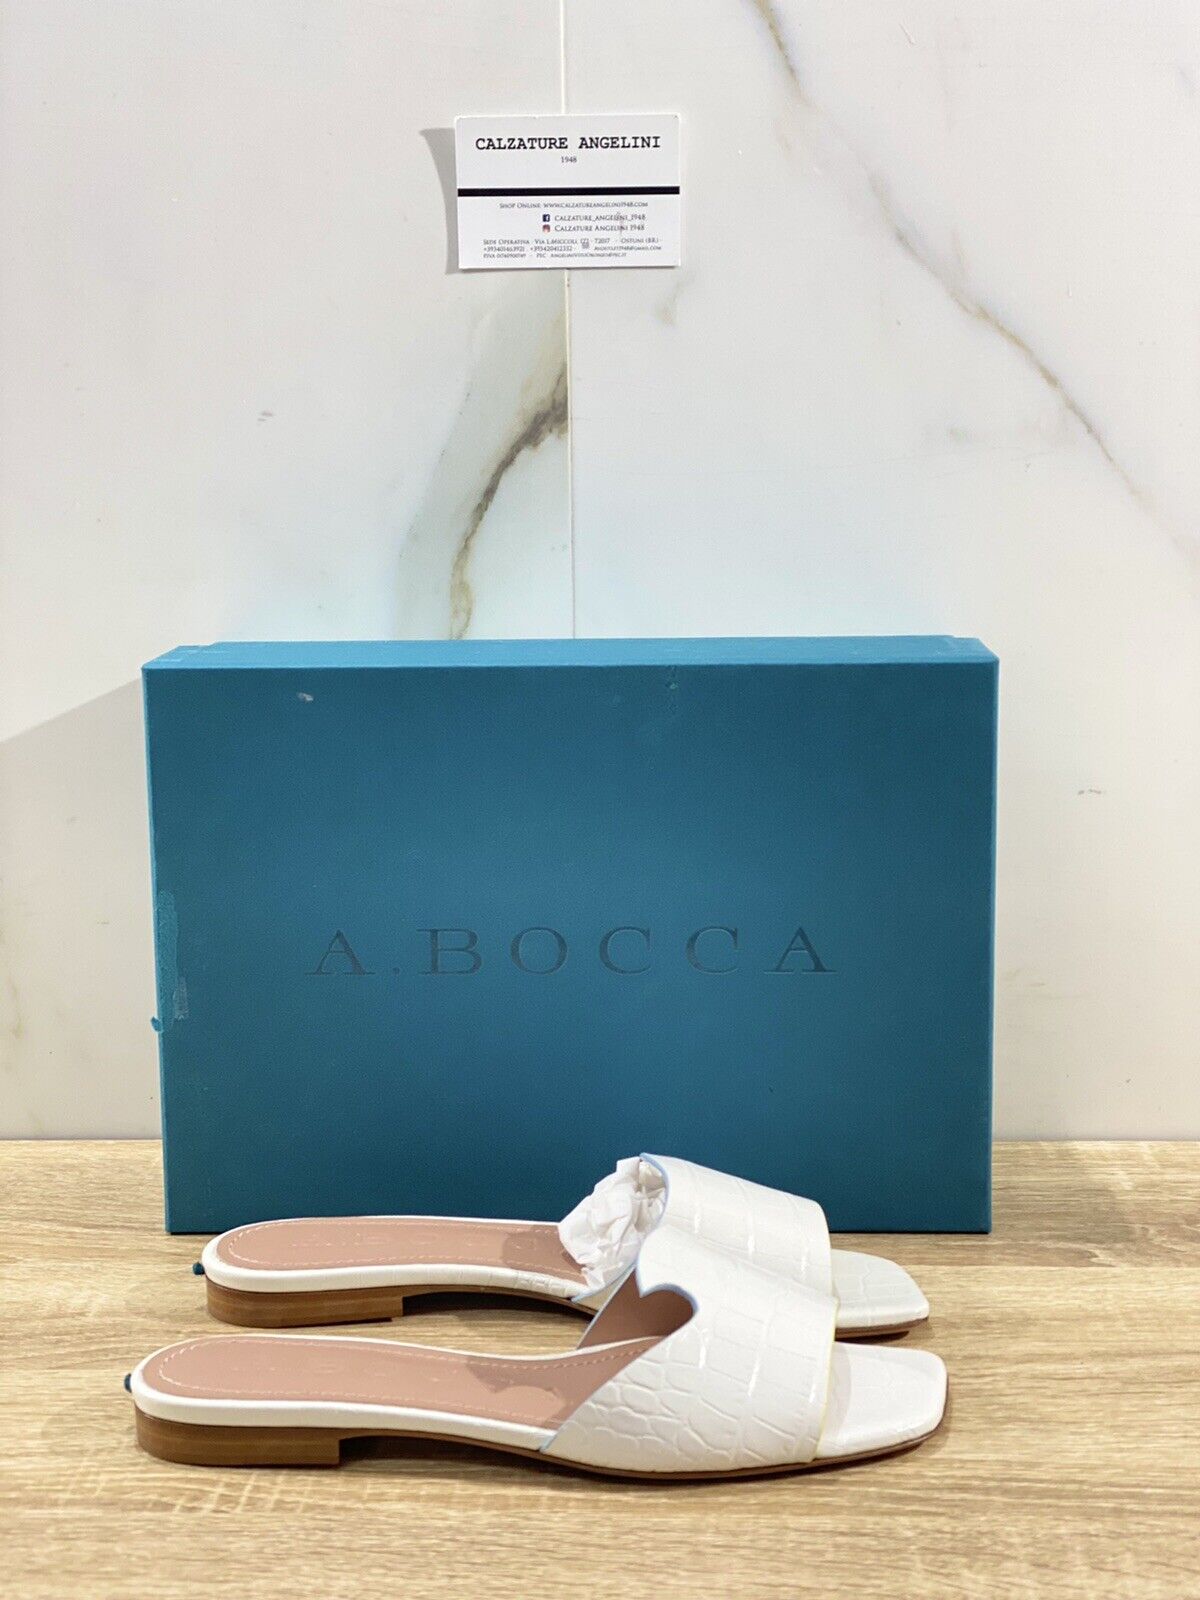 A.bocca Sandalo Donna AB2102A In Pelle Bianca         Luxury Sandal Woman 40